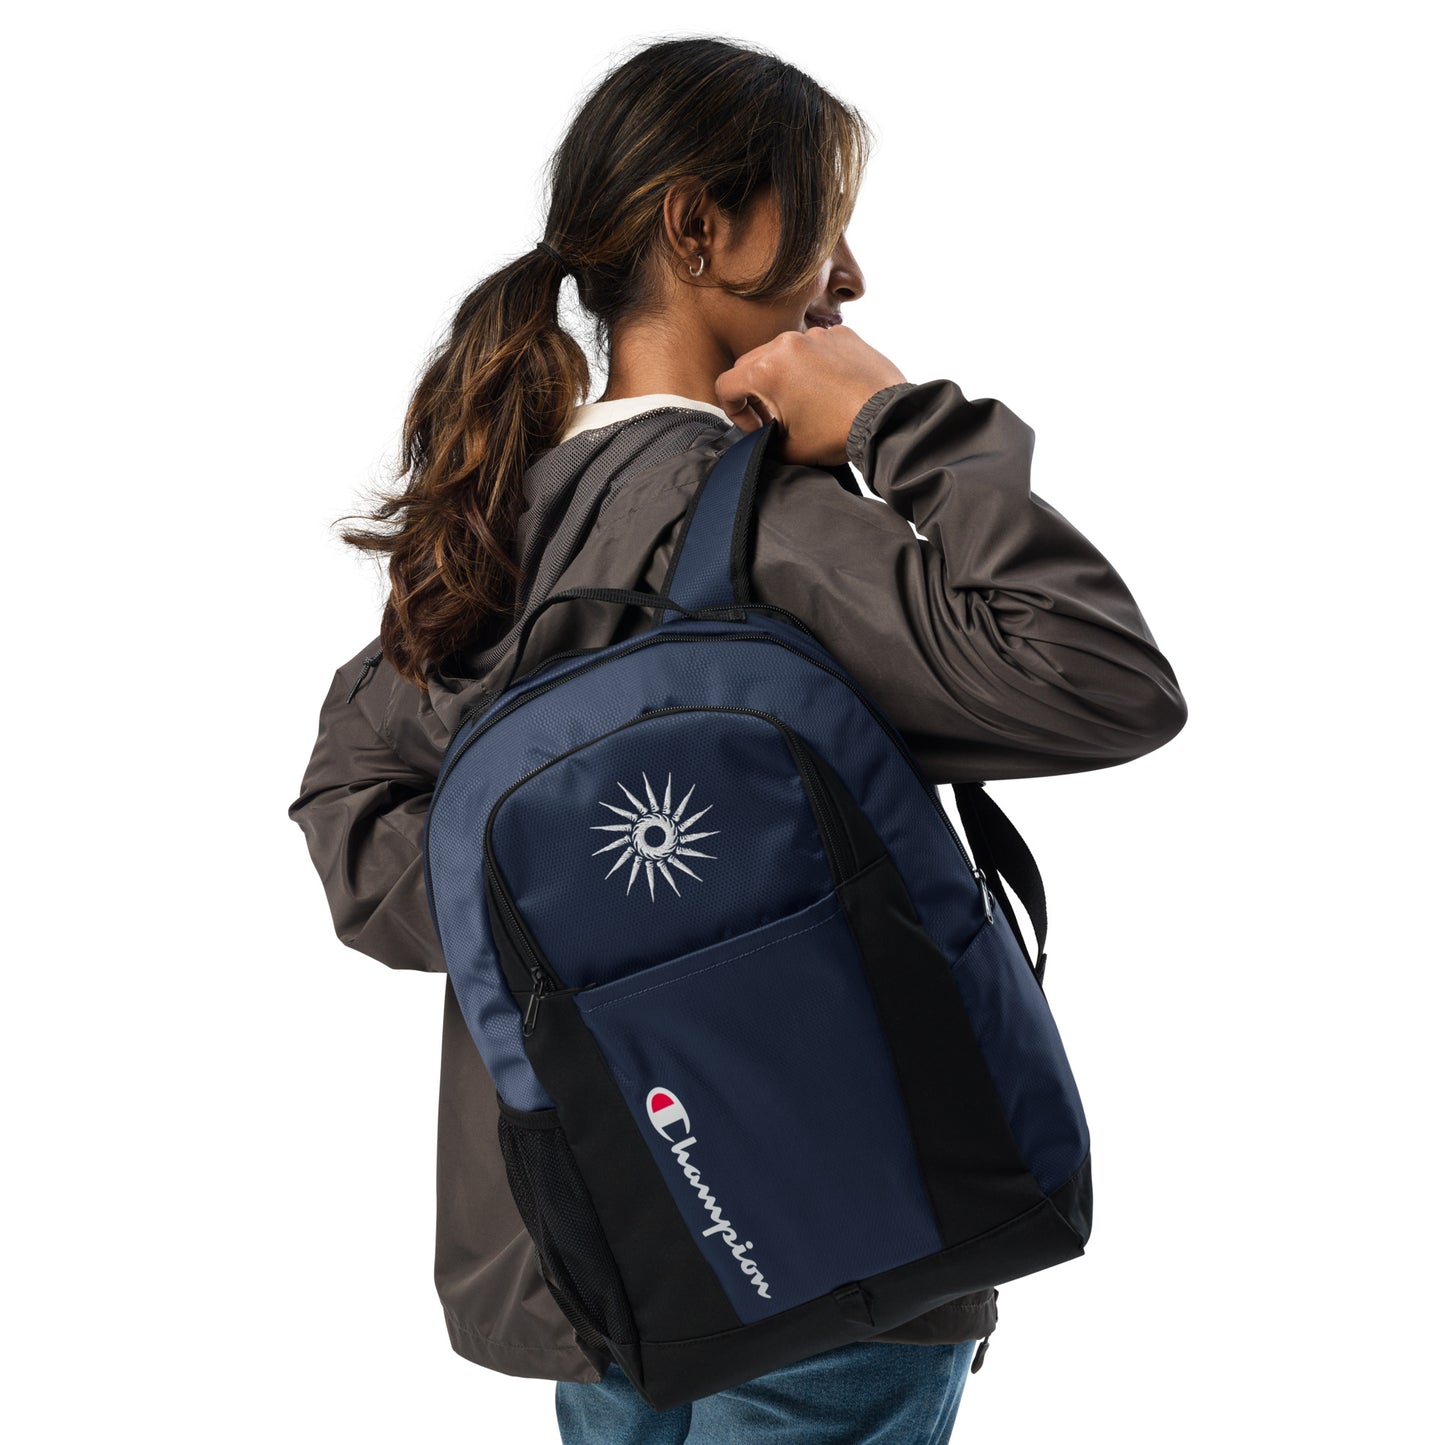 Champion "Bright Sun" Backpack